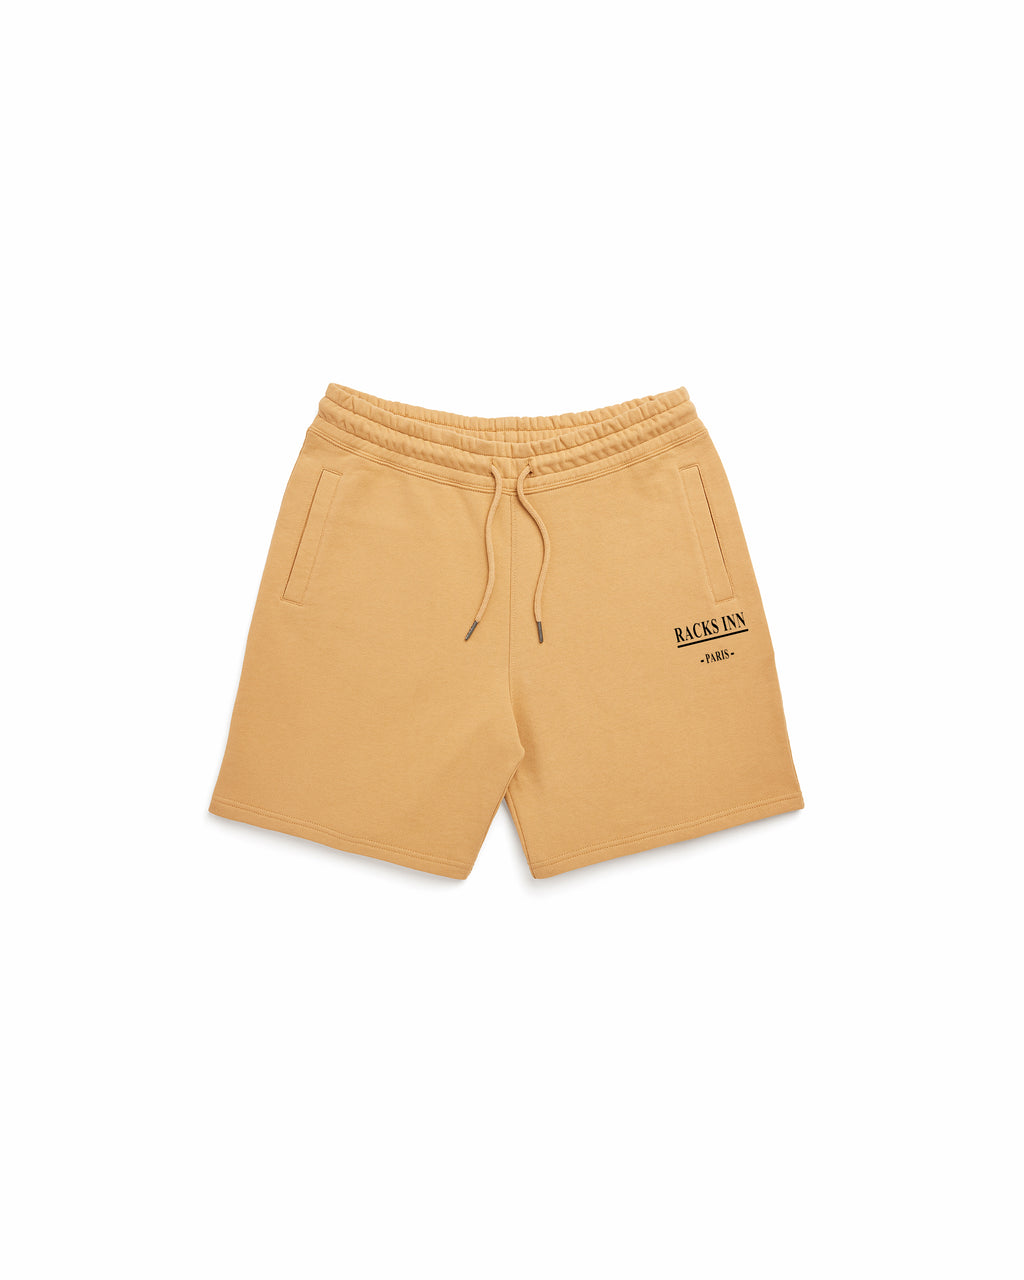 Paris Shorts - Dust Tan